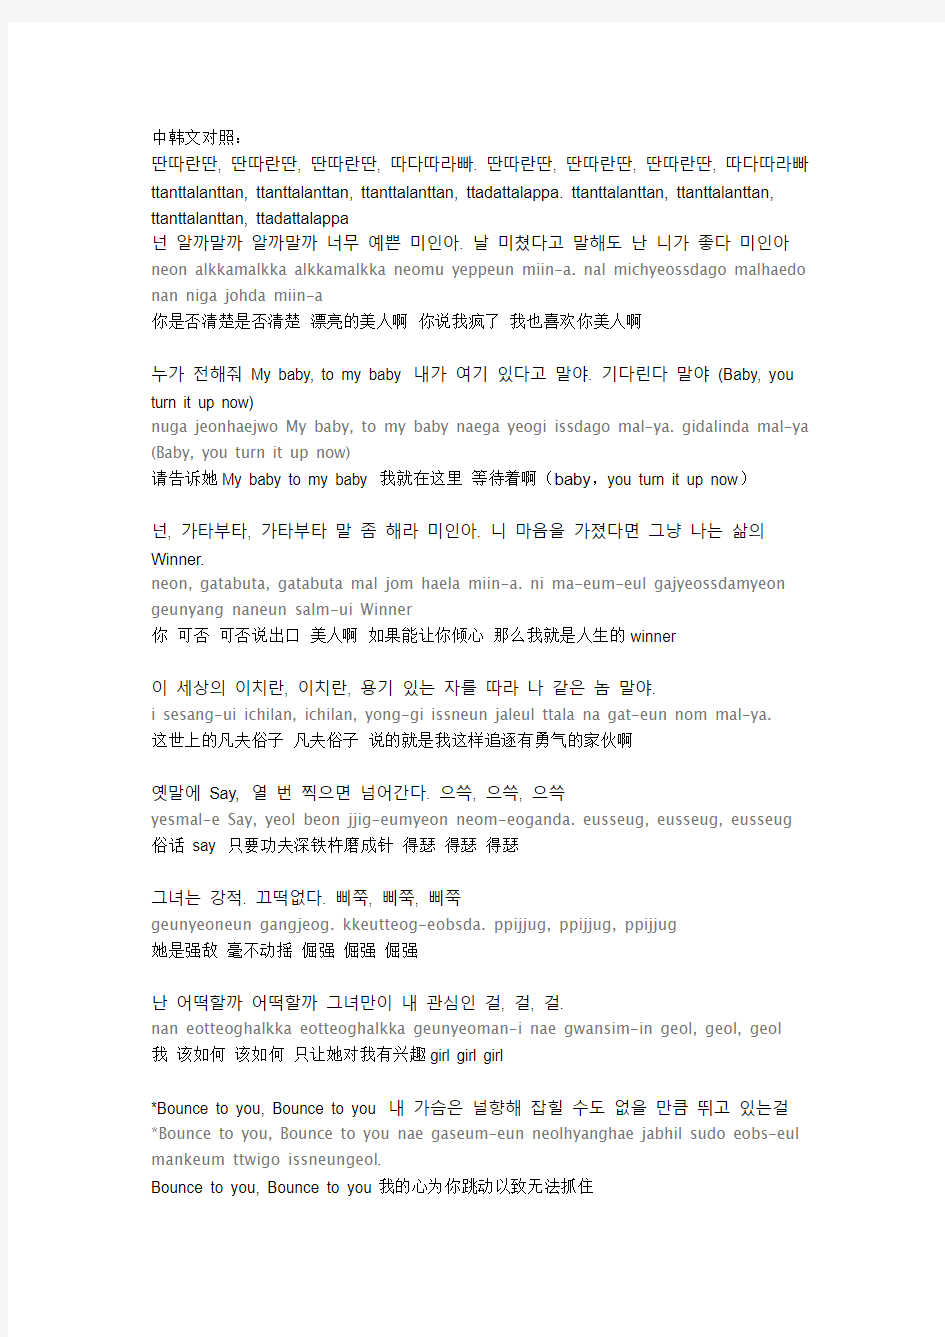 Super Junior - Bonamana中文、韩文及罗马拼音对照歌词